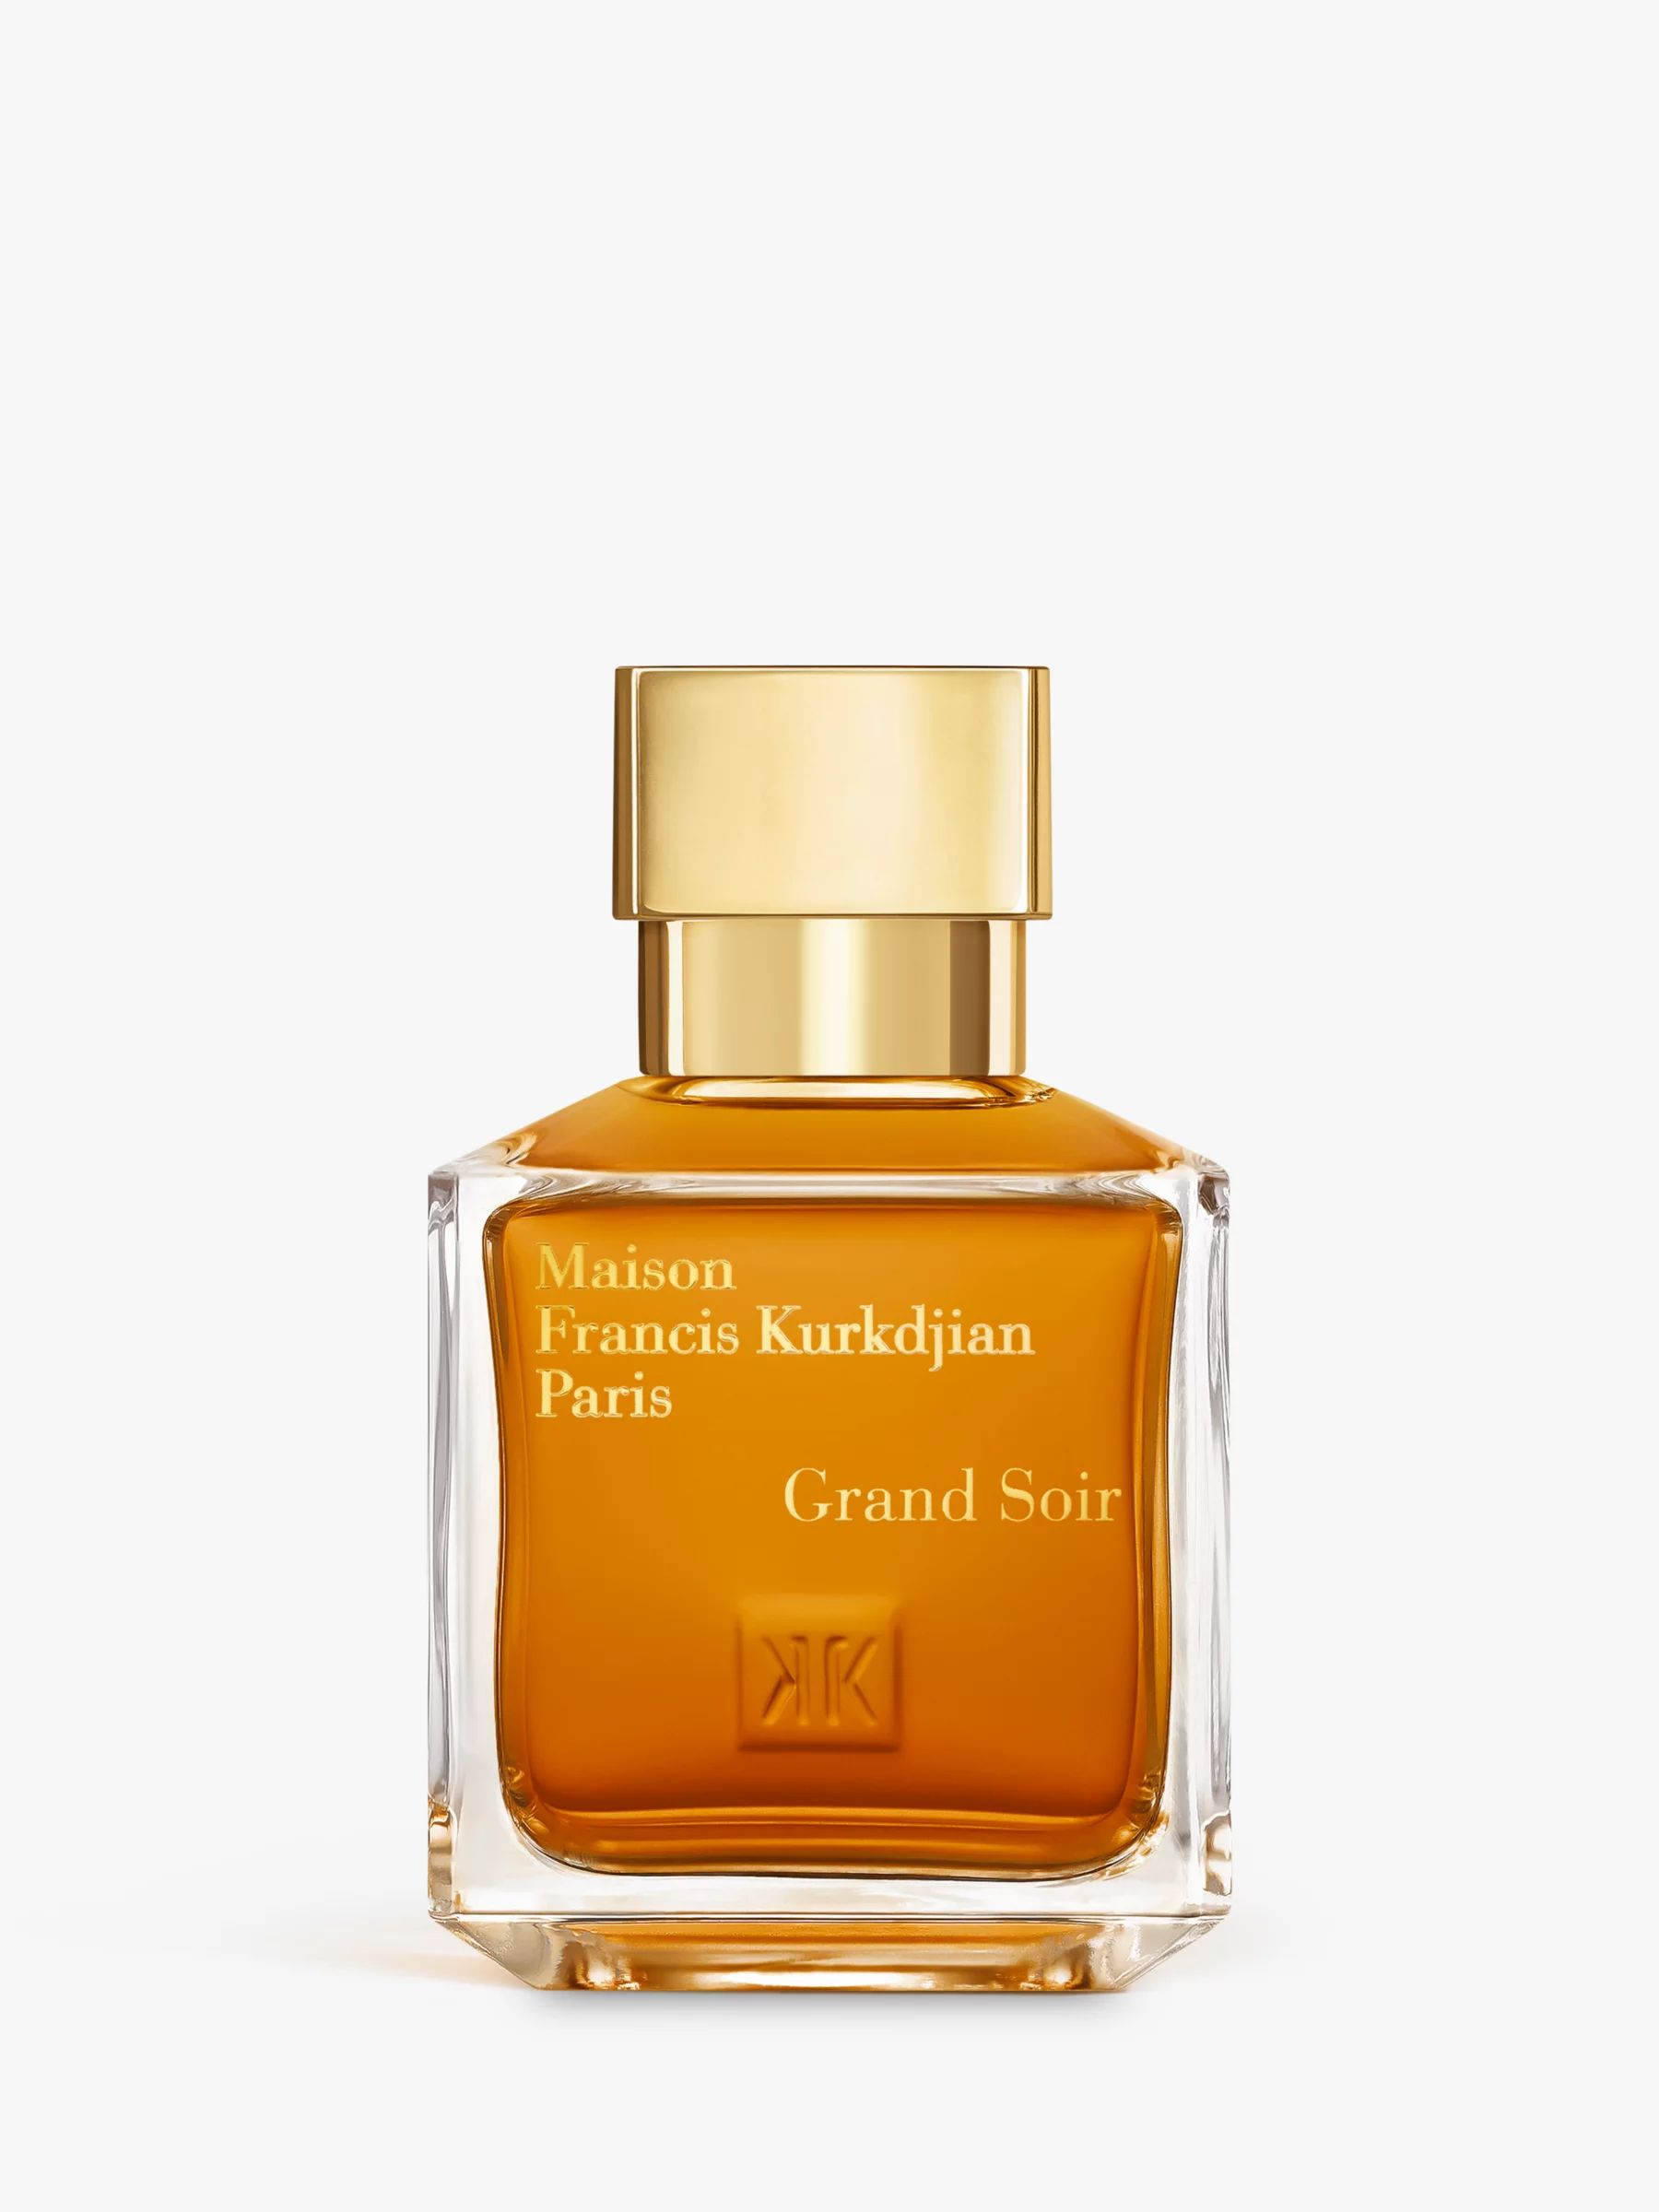 Maison Francis Kurkdjian Grand Soir Eau de Parfum, 70ml | John Lewis (UK)